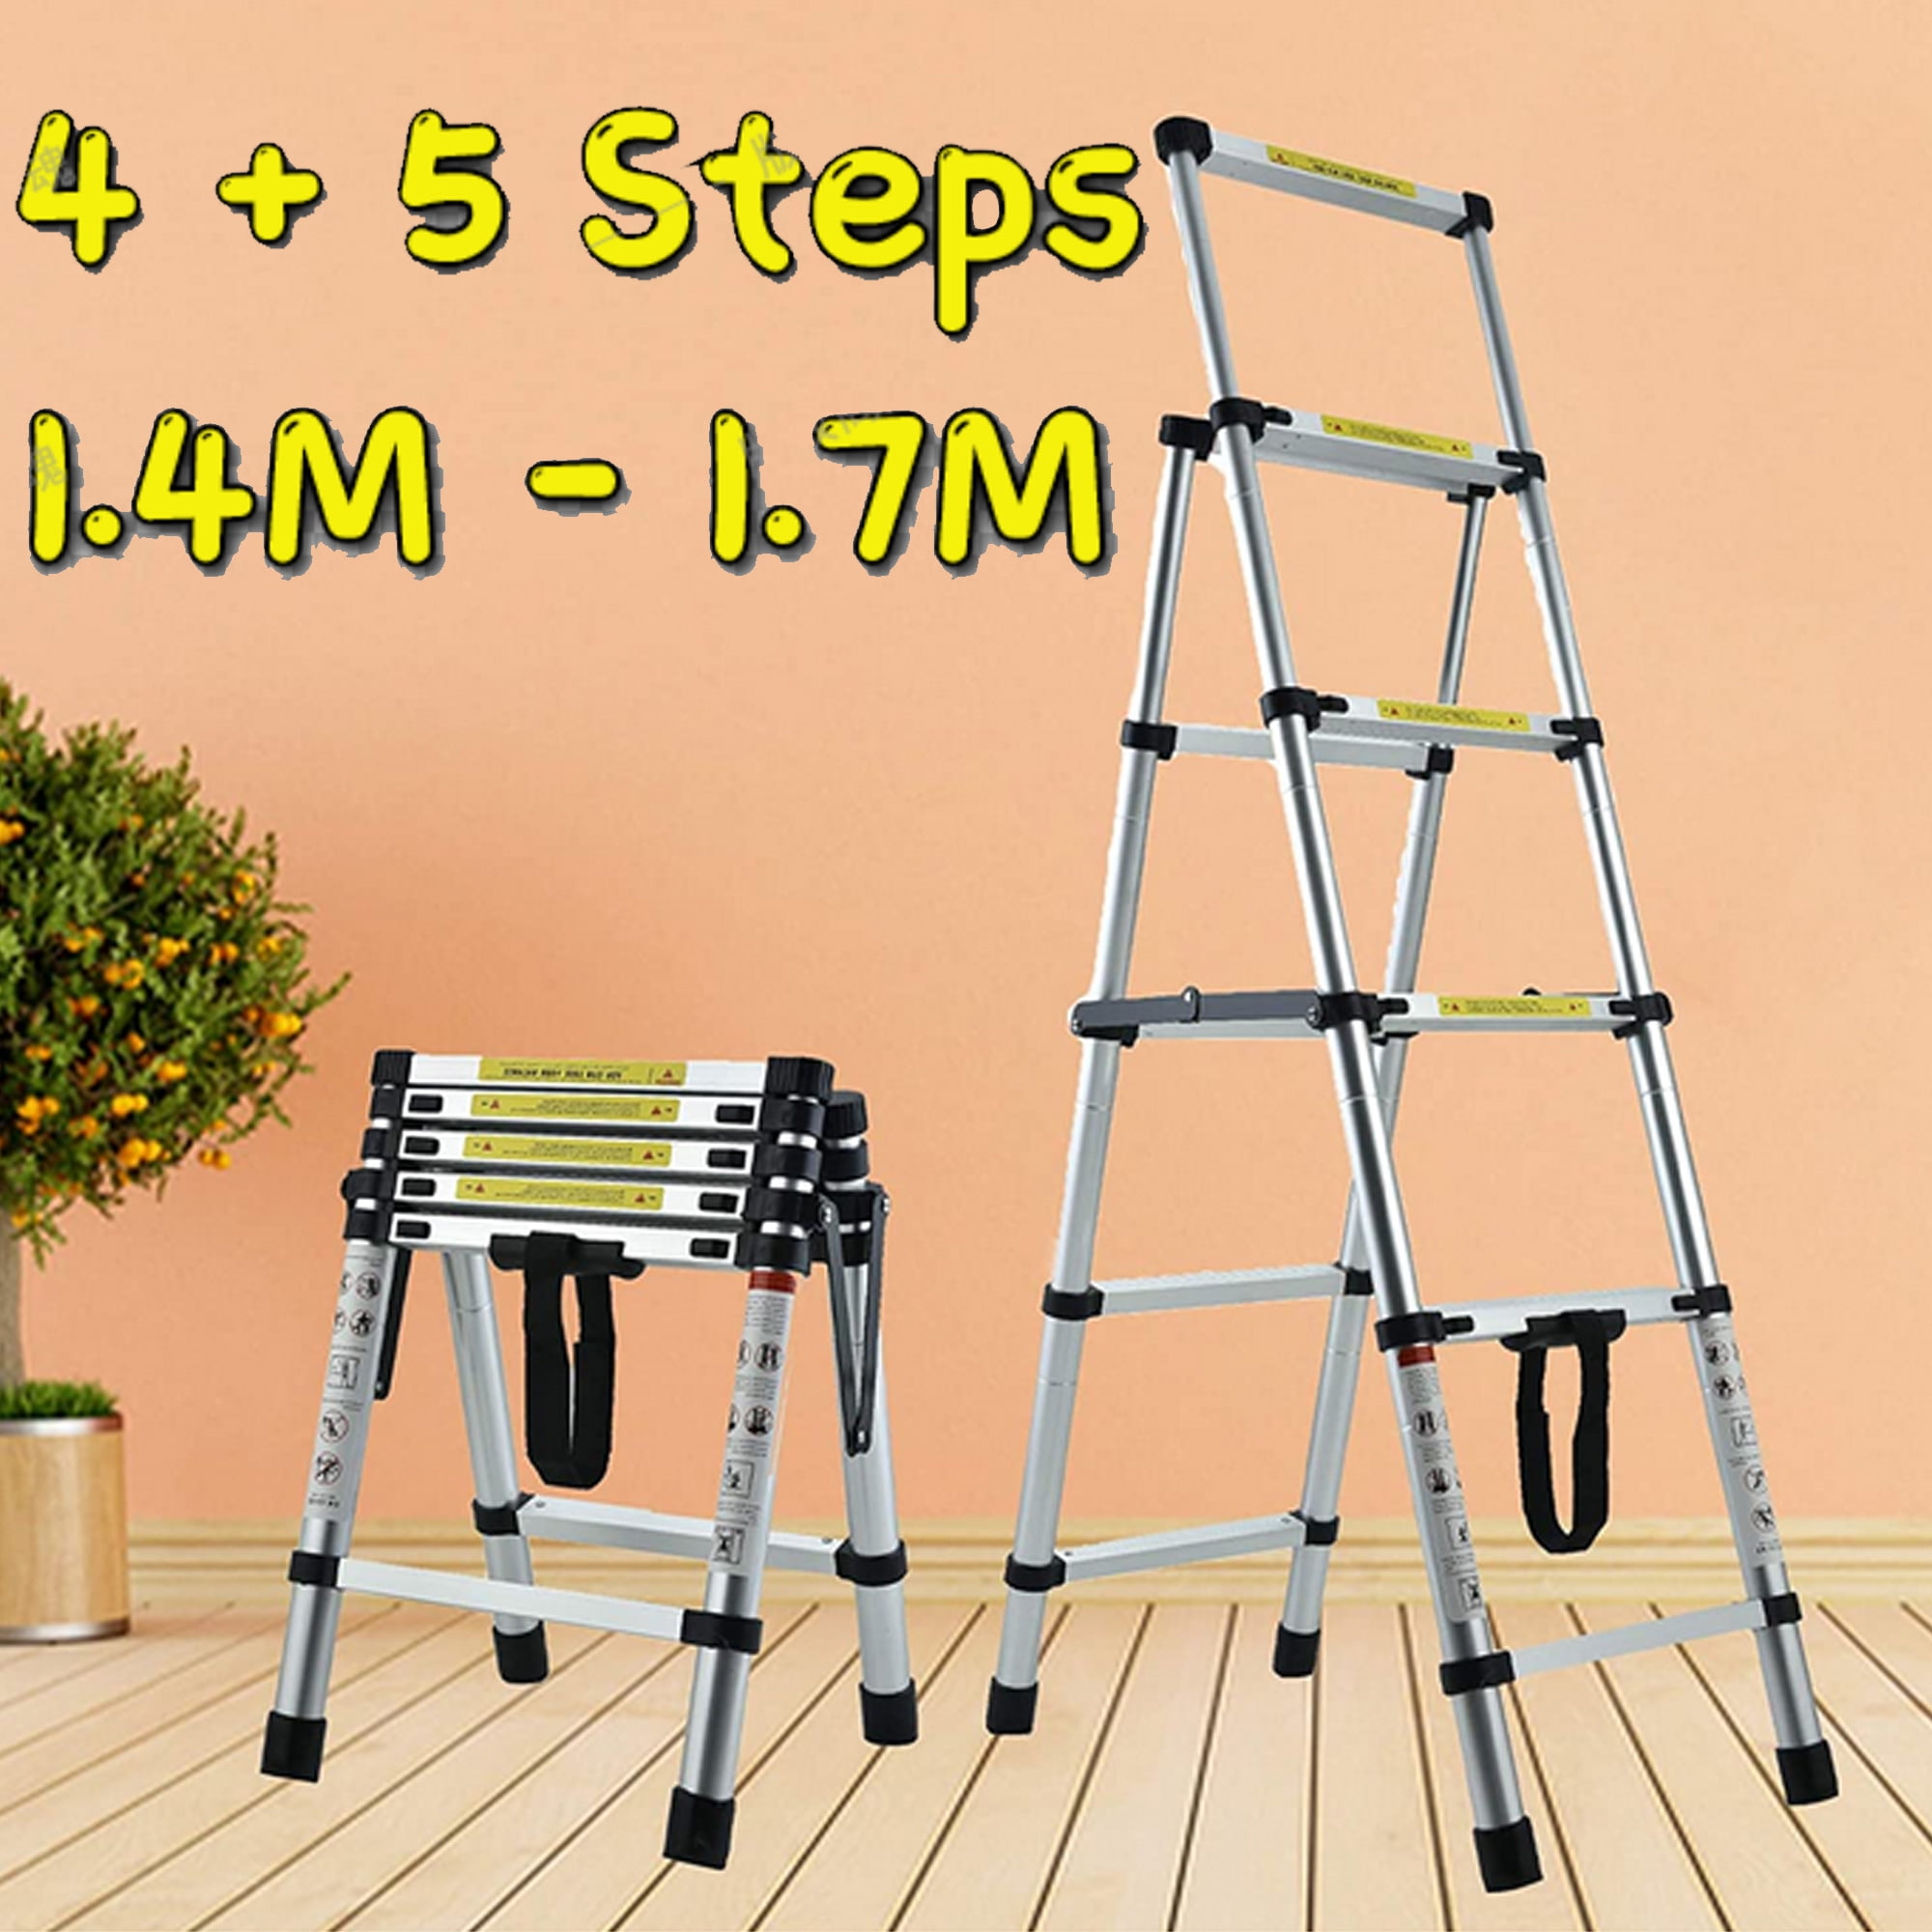 zwaan twintig kant Bowoshen Aluminium Step Ladder 2 Ways Combination with Handrail, 1.4M - 1.7M  Telescopic Folding Extension Ladder for Household DIY Building Work ( 4 + 5  Steps) - Walmart.com